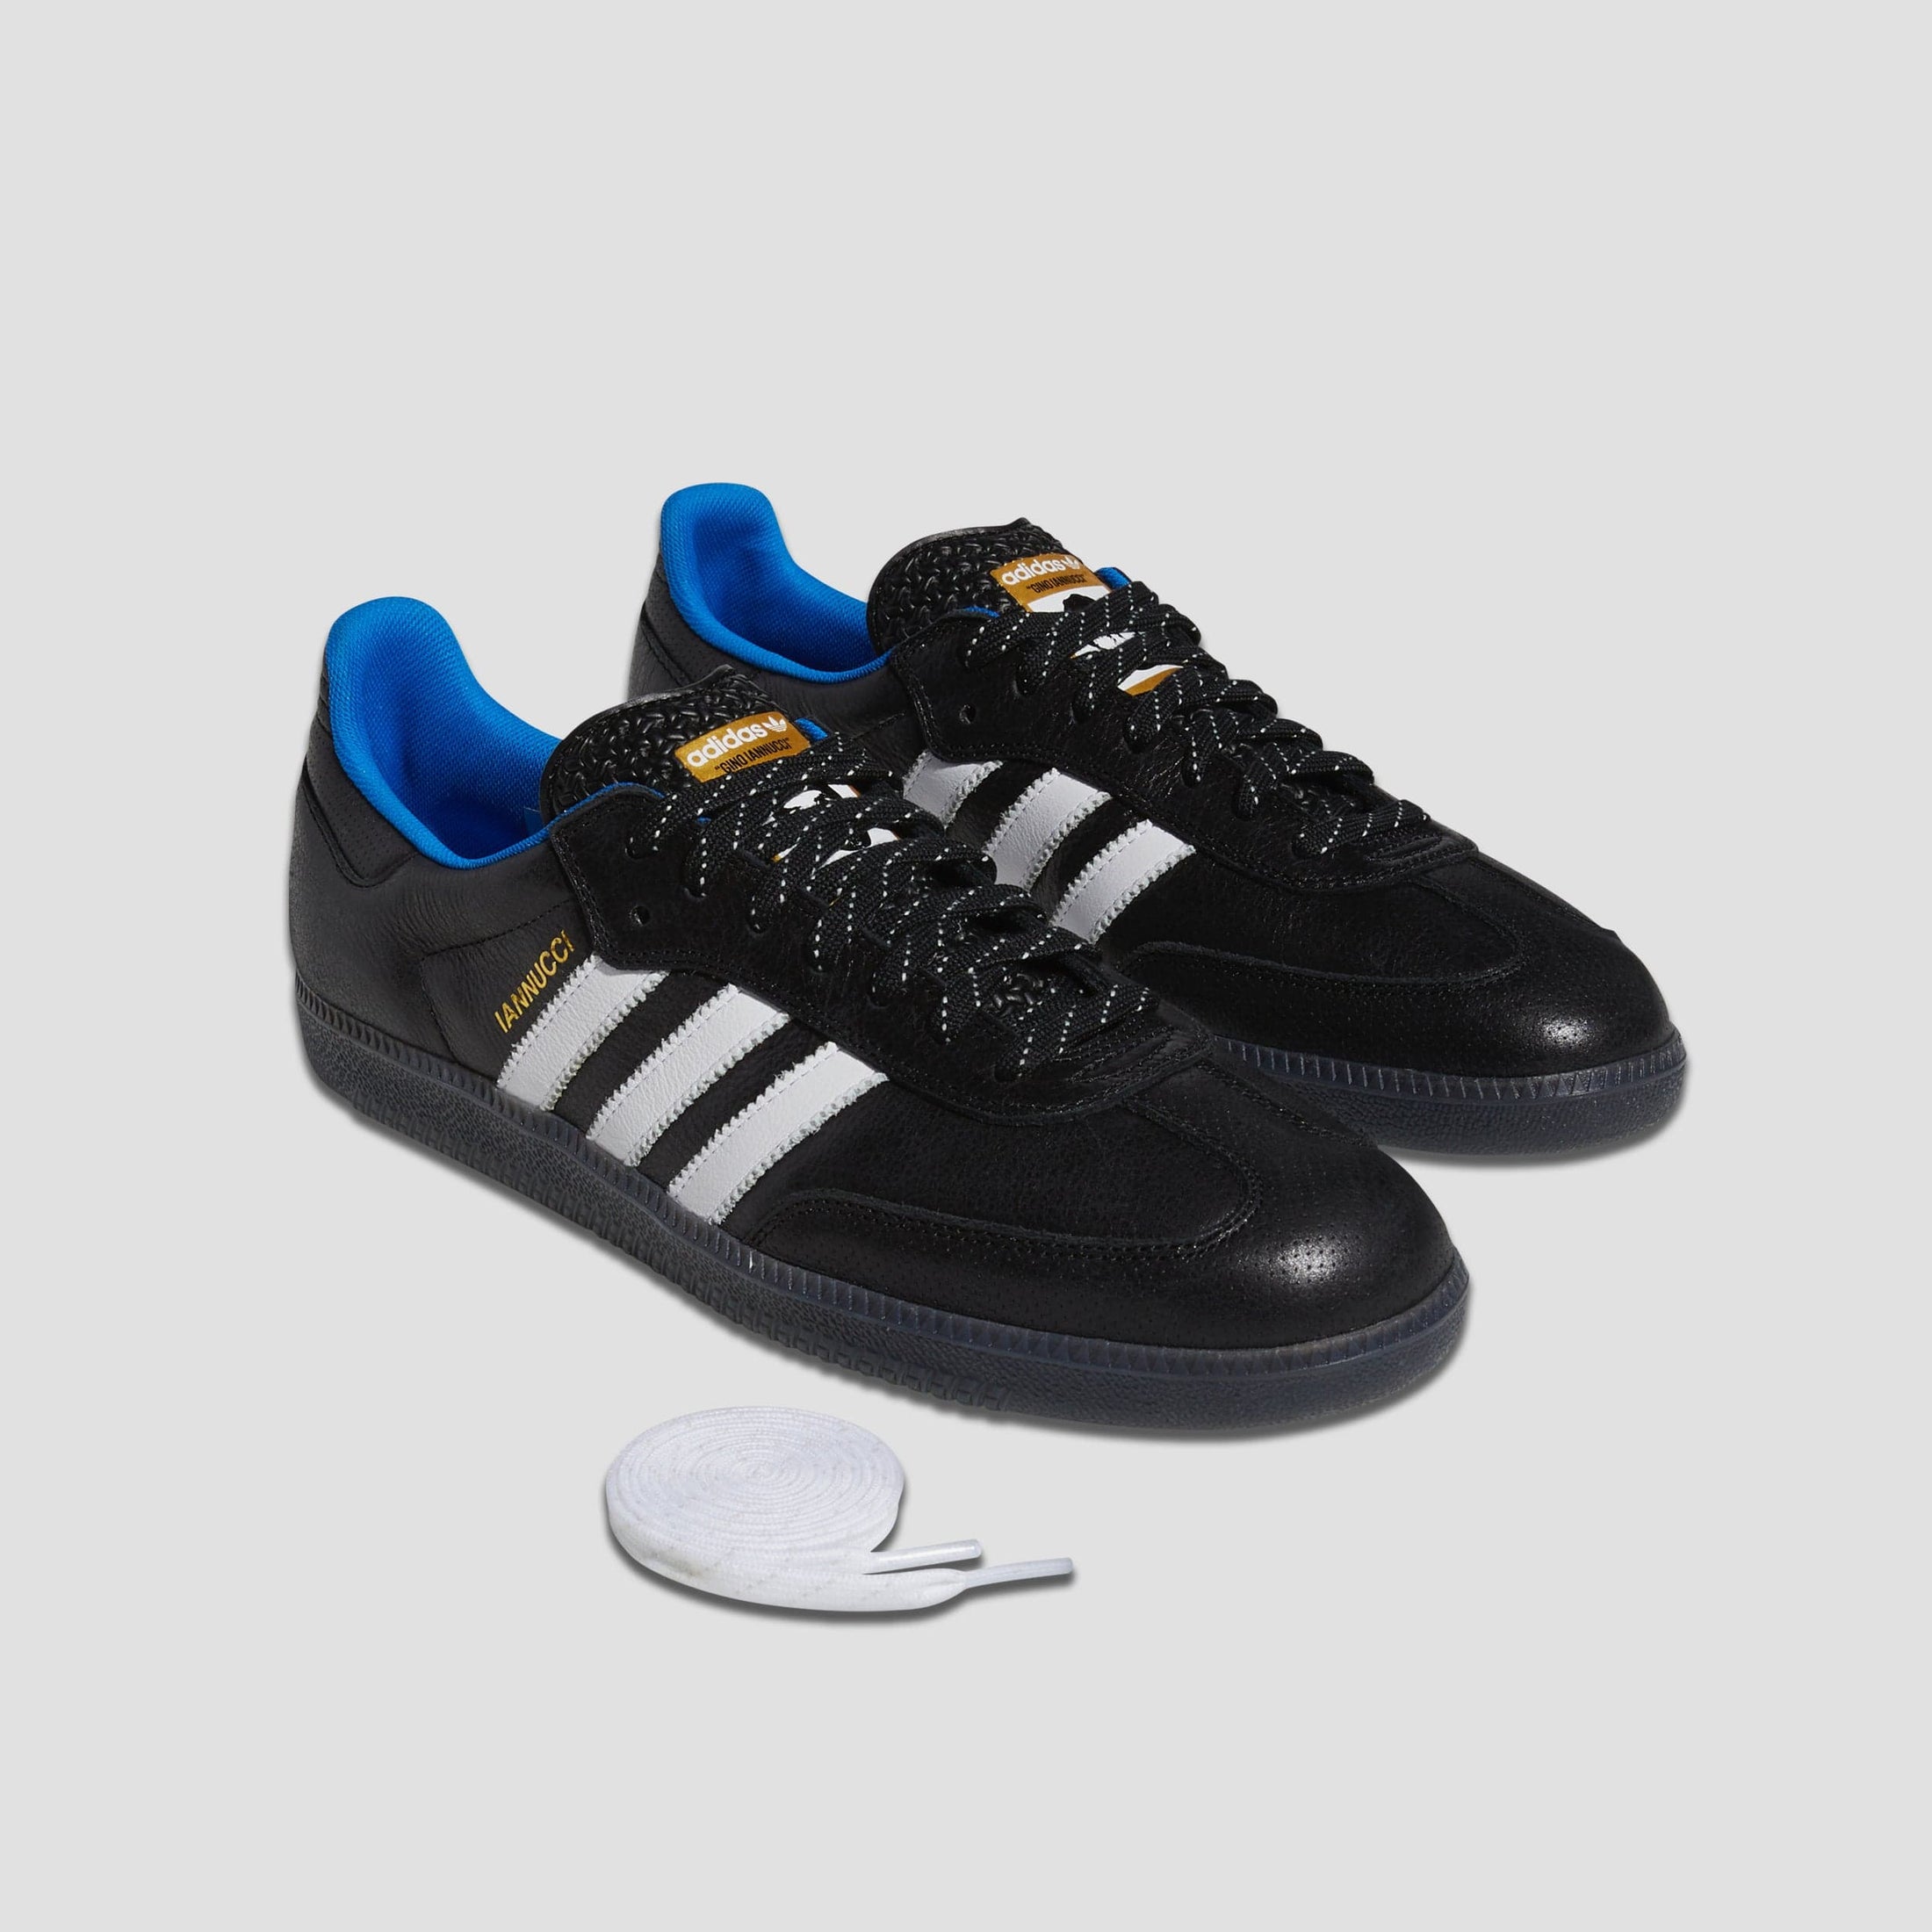 adidas Samba Adv Gino Iannucci Skate Shoes Core Black / Footwear White / Blue Bird